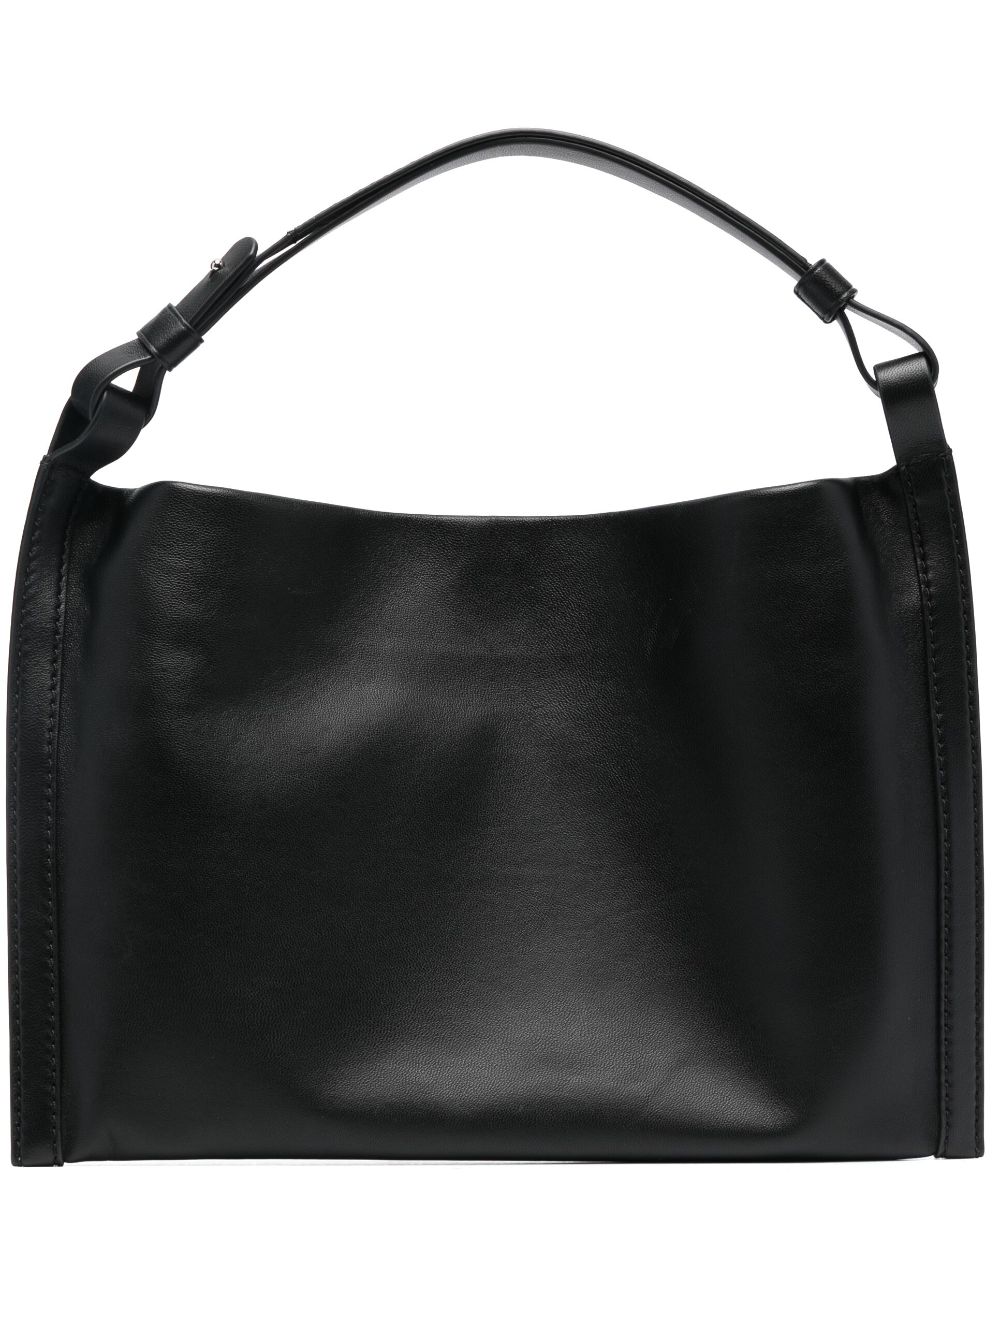 Proenza Schouler Minetta Leather Shoulder Bag - Farfetch